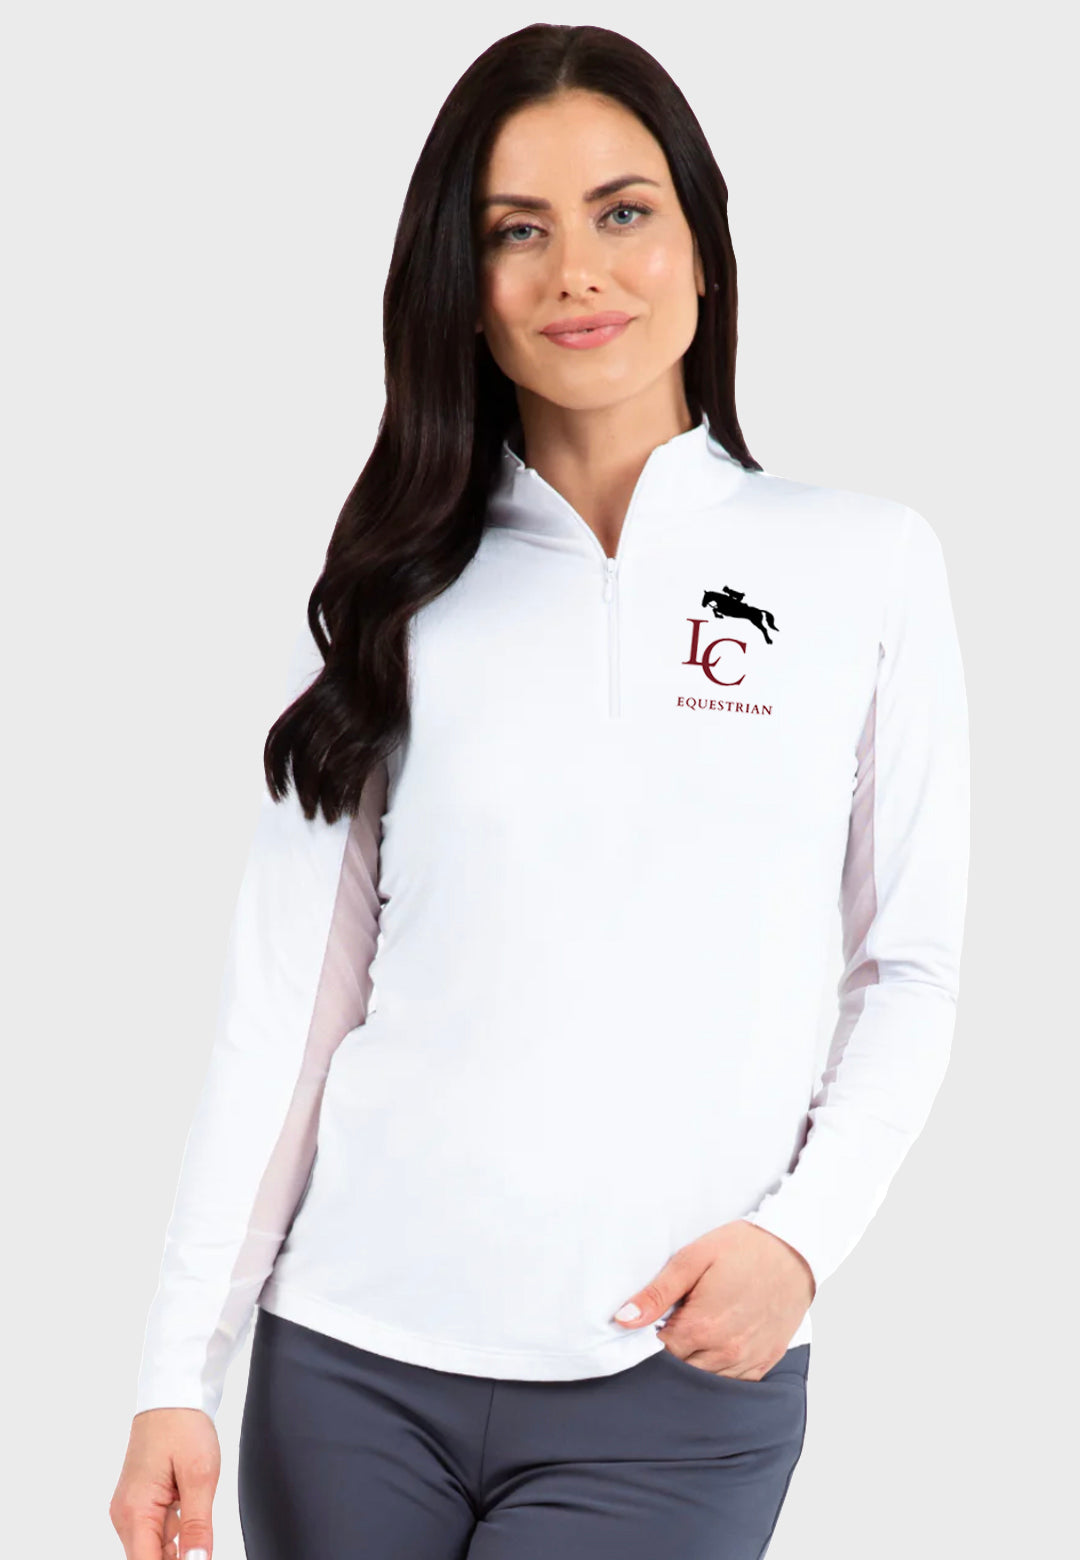 Loomis Chaffee Equestrian IBKÜL® Ladies Long Sleeve Sun Shirt - 2 Color Options